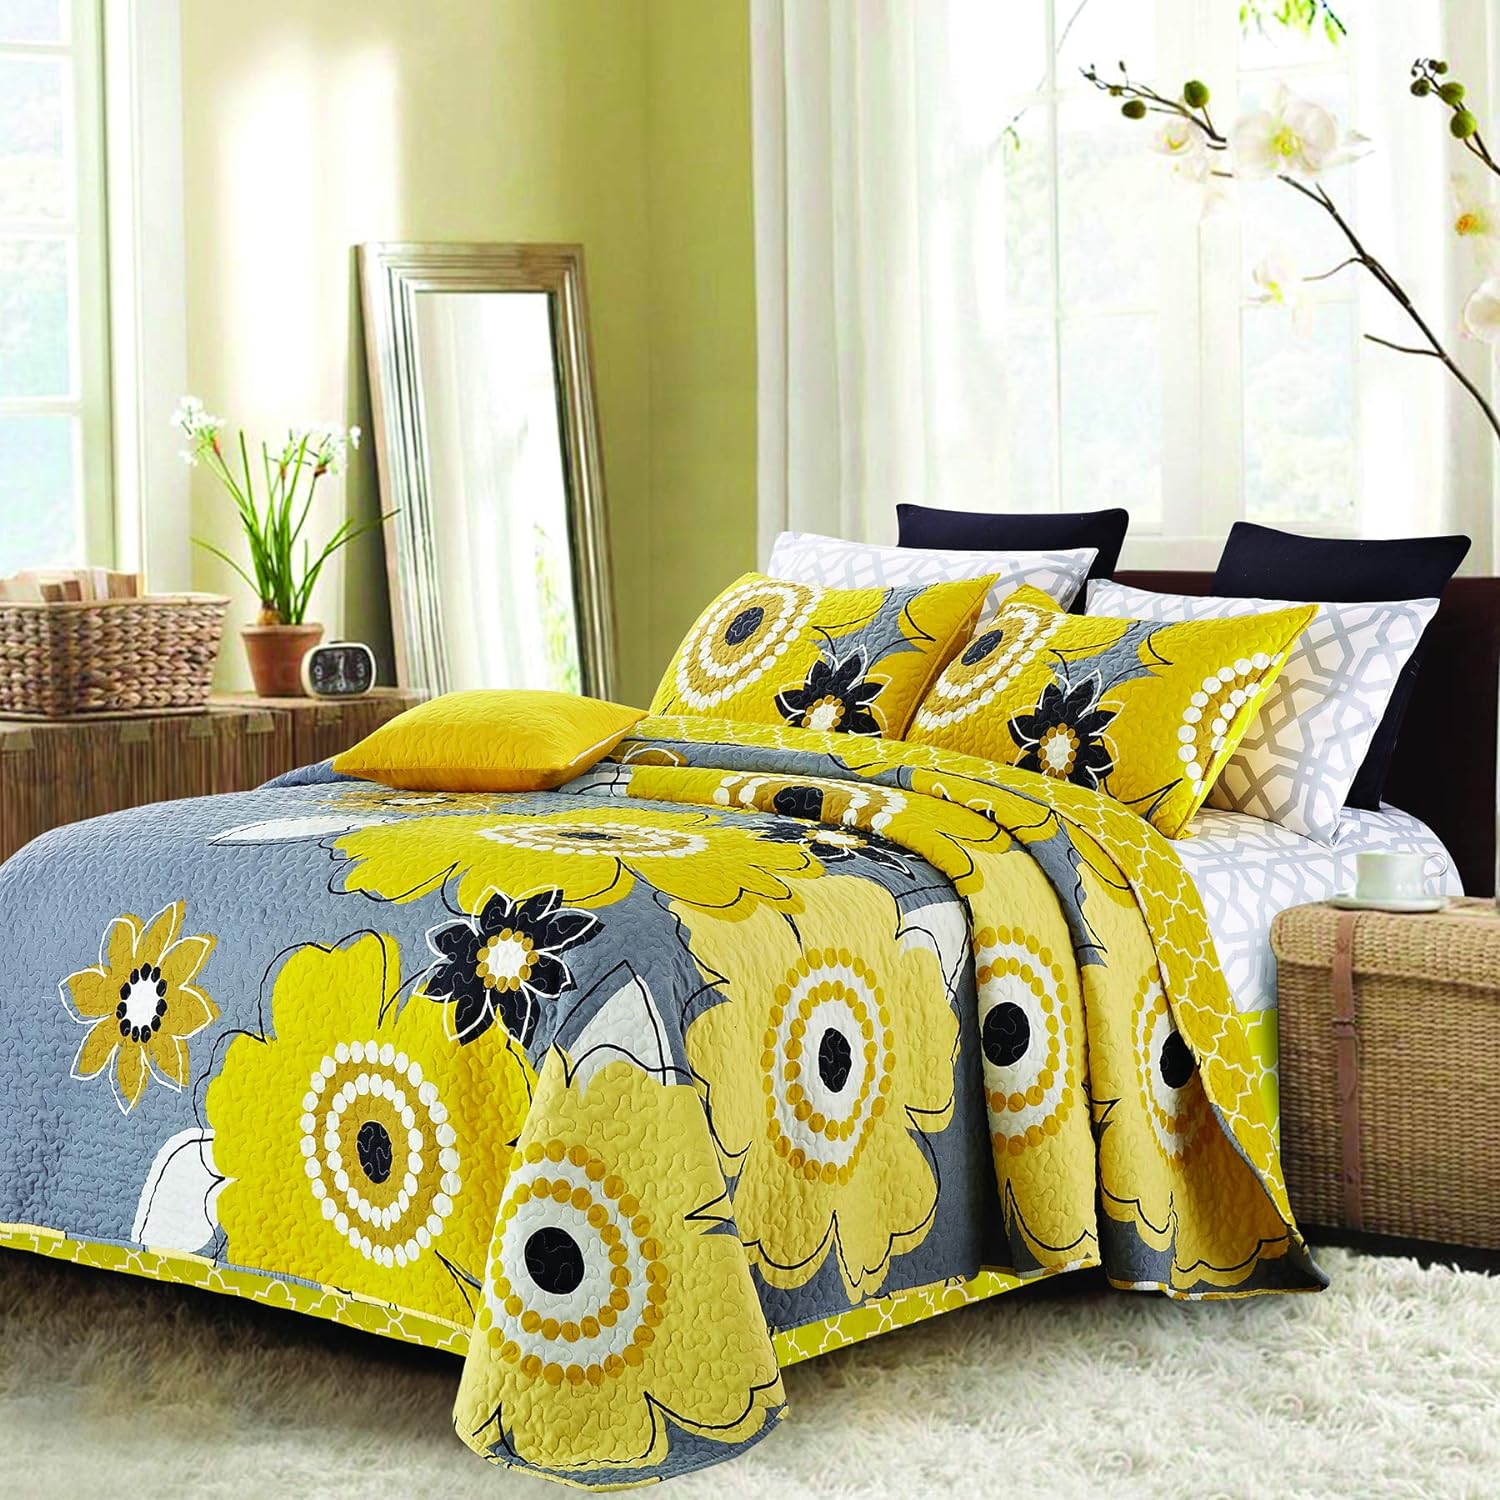 Virah Bella 2 Piece Full/Queen Lodge Quilt Bedding Set - Rustic Country Reversible Comforter Set with Decorative Pillow Shams - Francesca